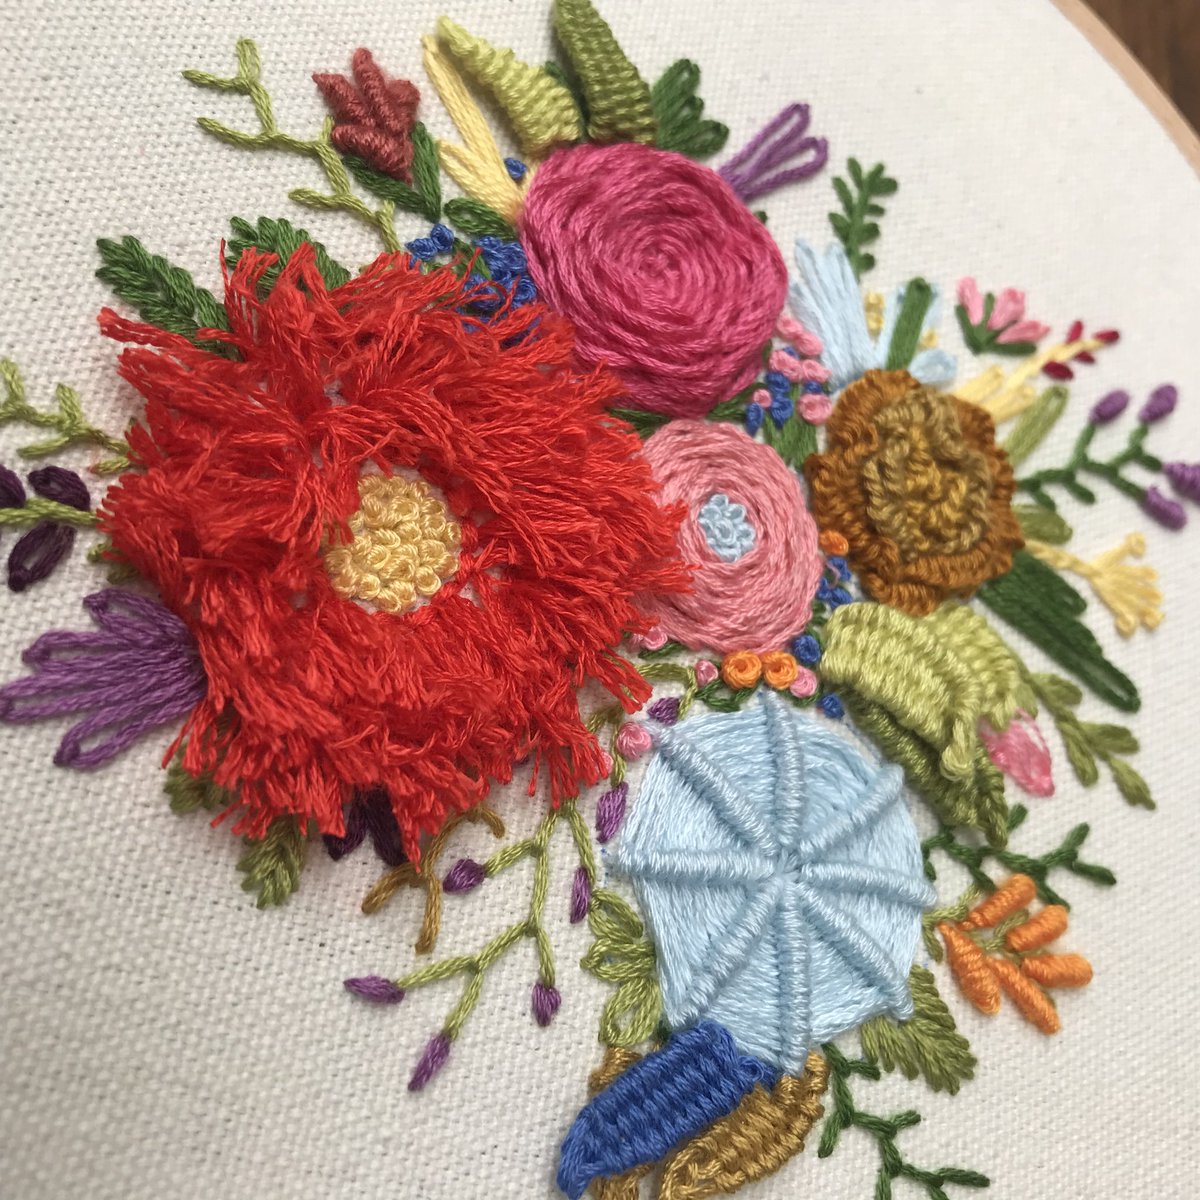 Embroidery flowers 🌺 #embroidery #embroideryflowers #tecnicasmixtas